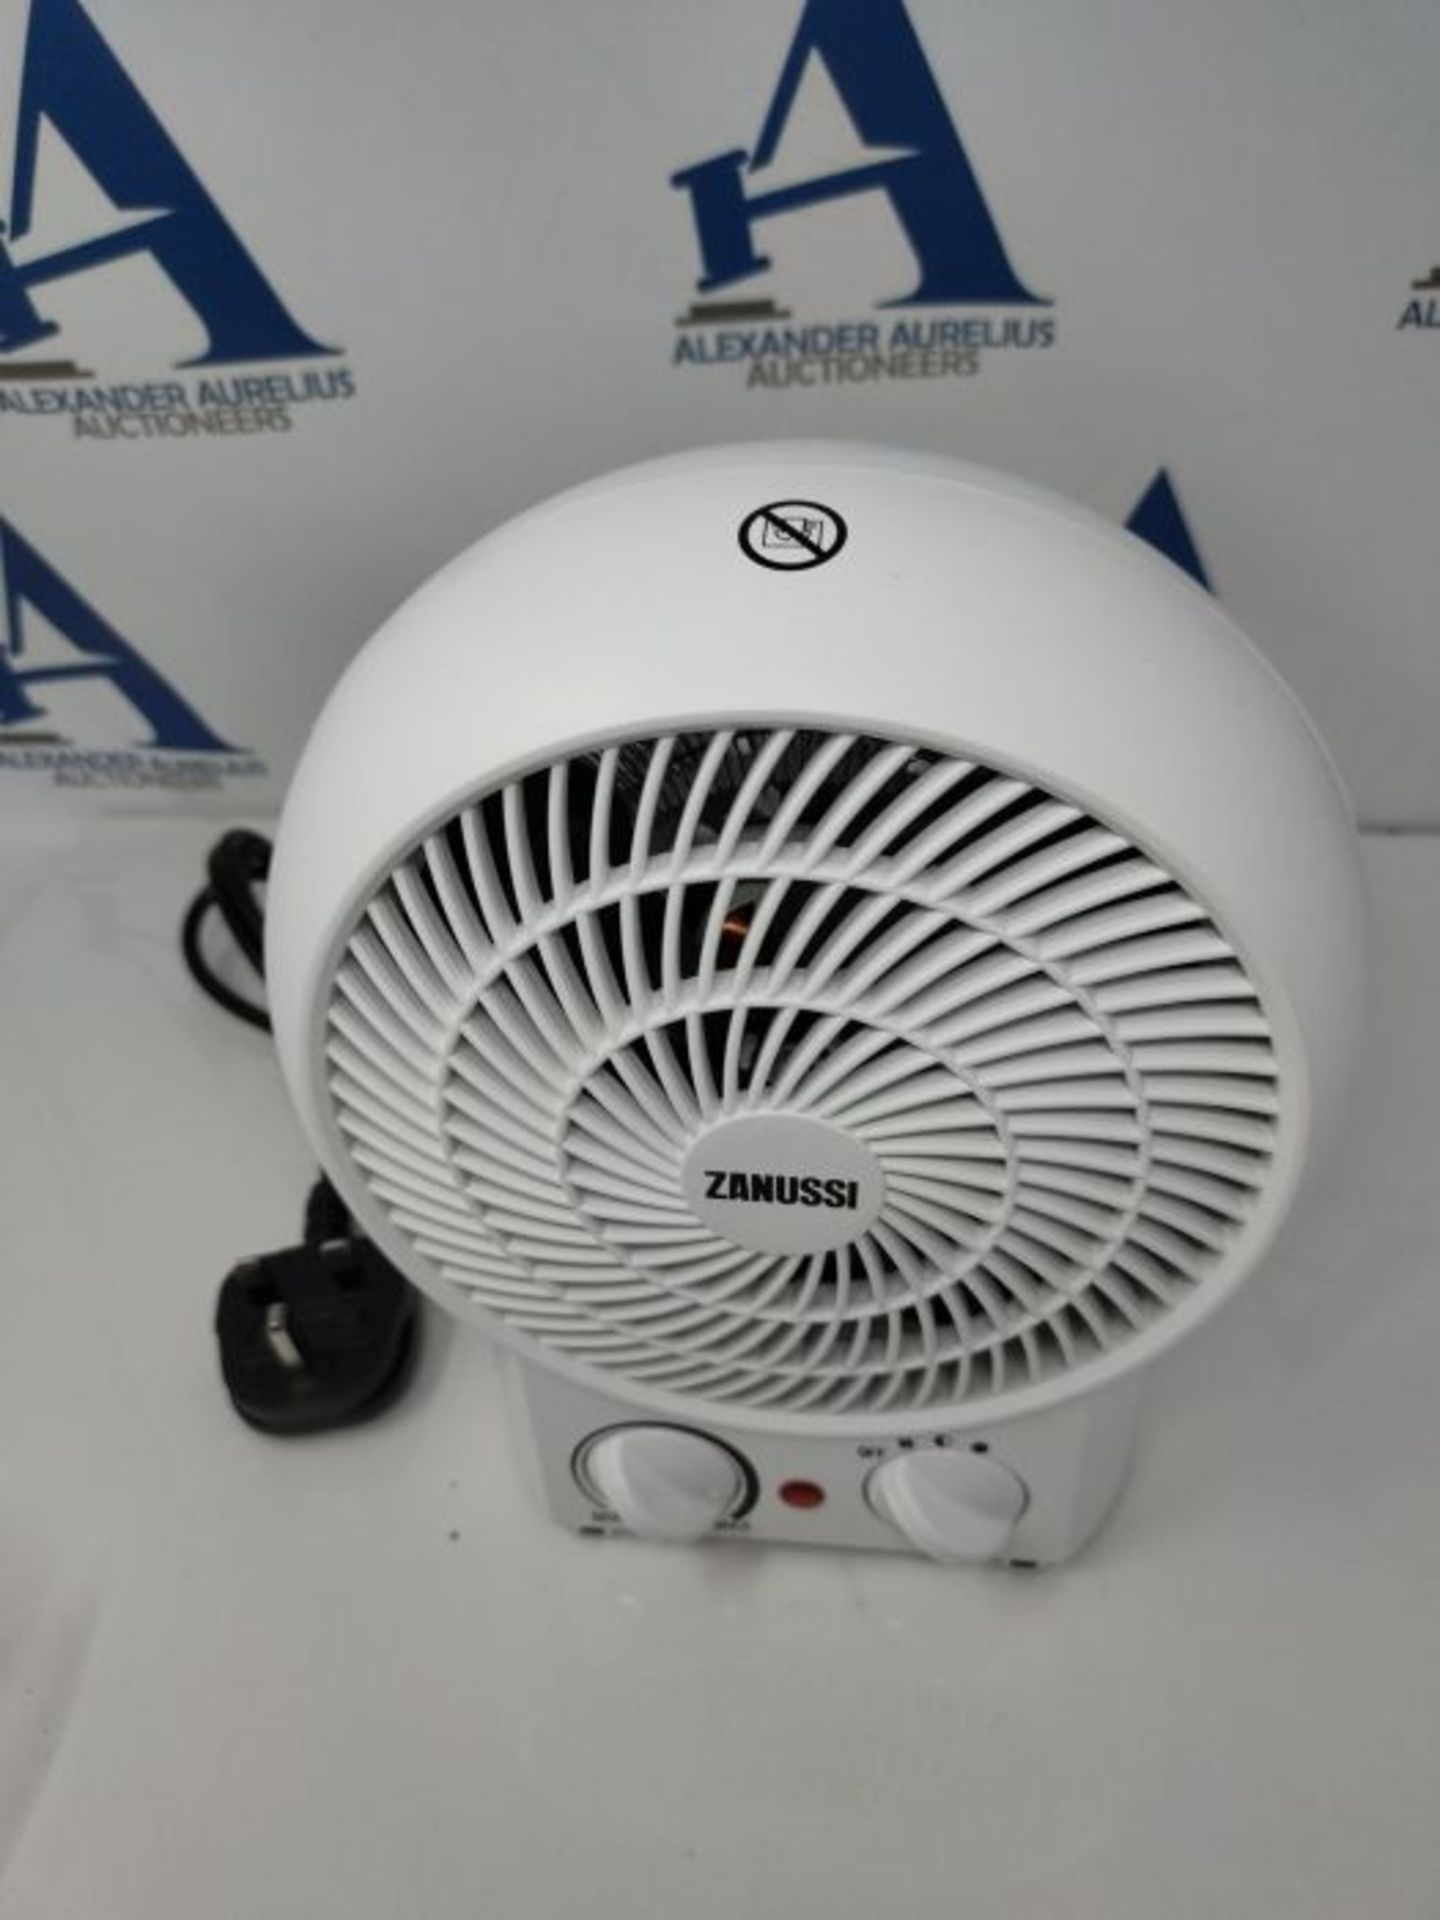 Zanussi ZFH1001 2000W Portable Upright Fan Heater, Two Heat Settings, Overheat Protect - Image 3 of 3